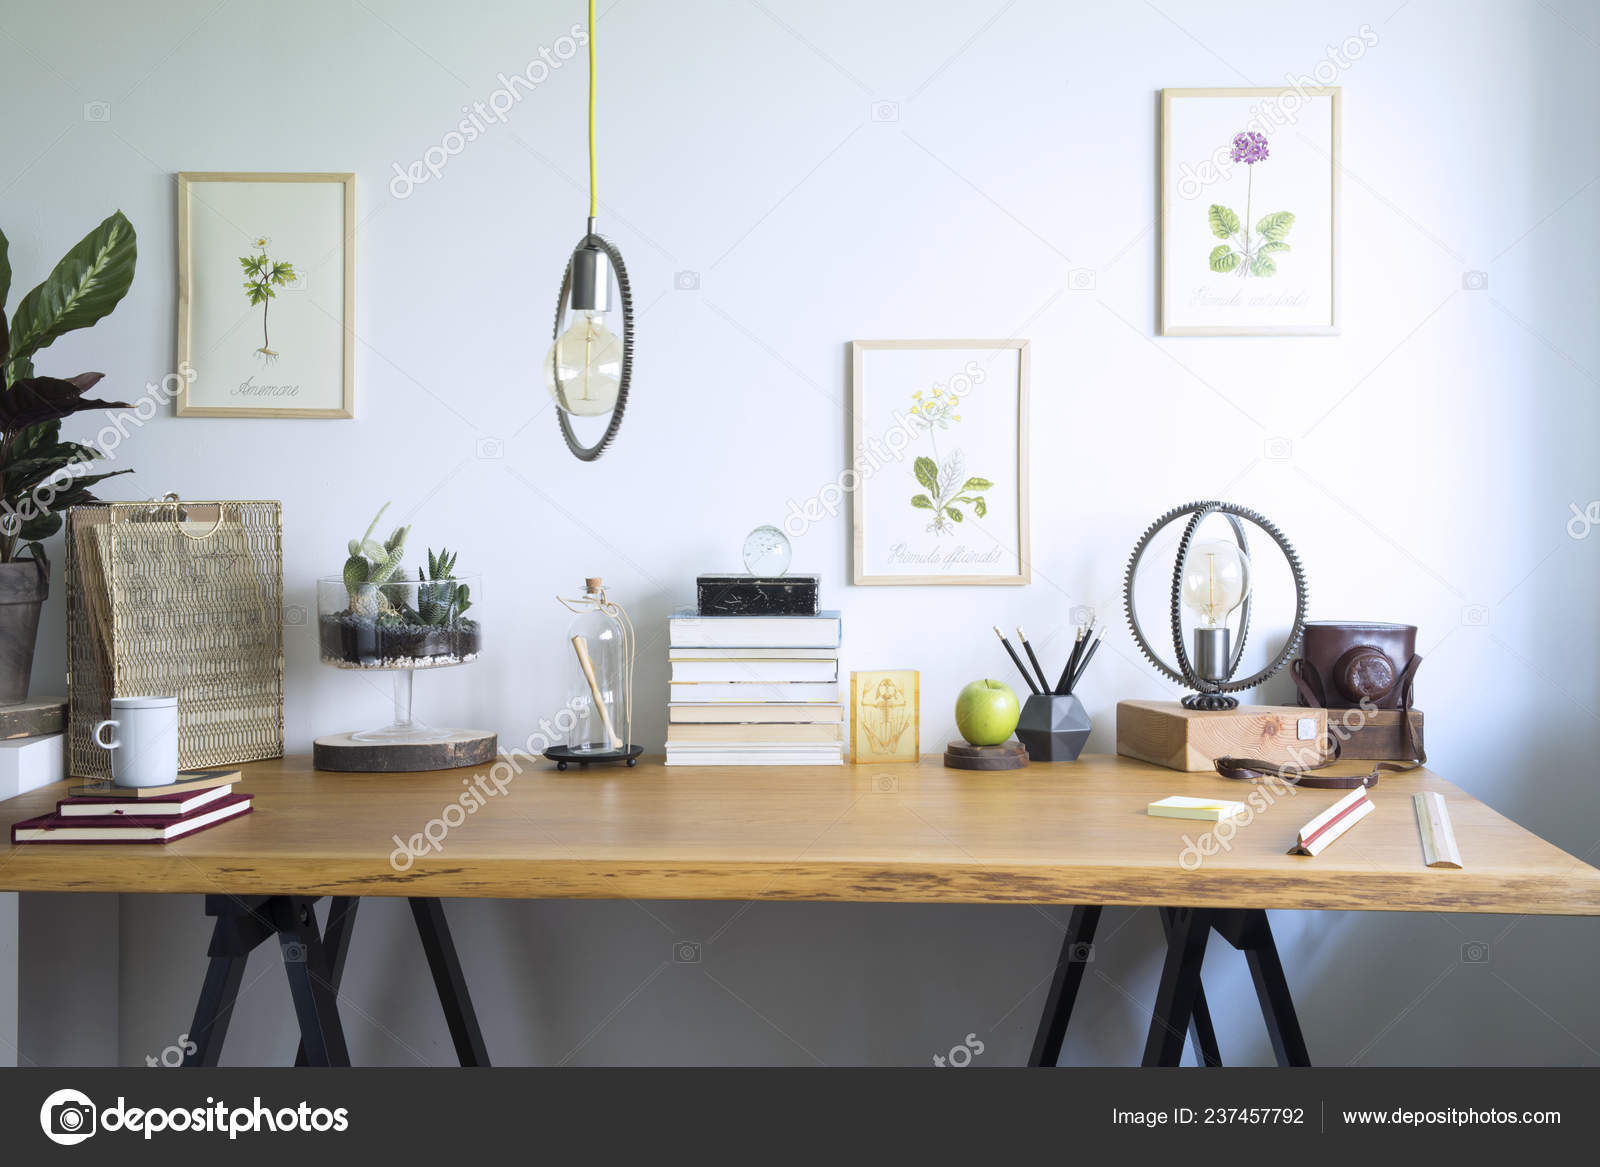 https://st4.depositphotos.com/22220764/23745/i/1600/depositphotos_237457792-stock-photo-vintage-creative-home-office-interior.jpg